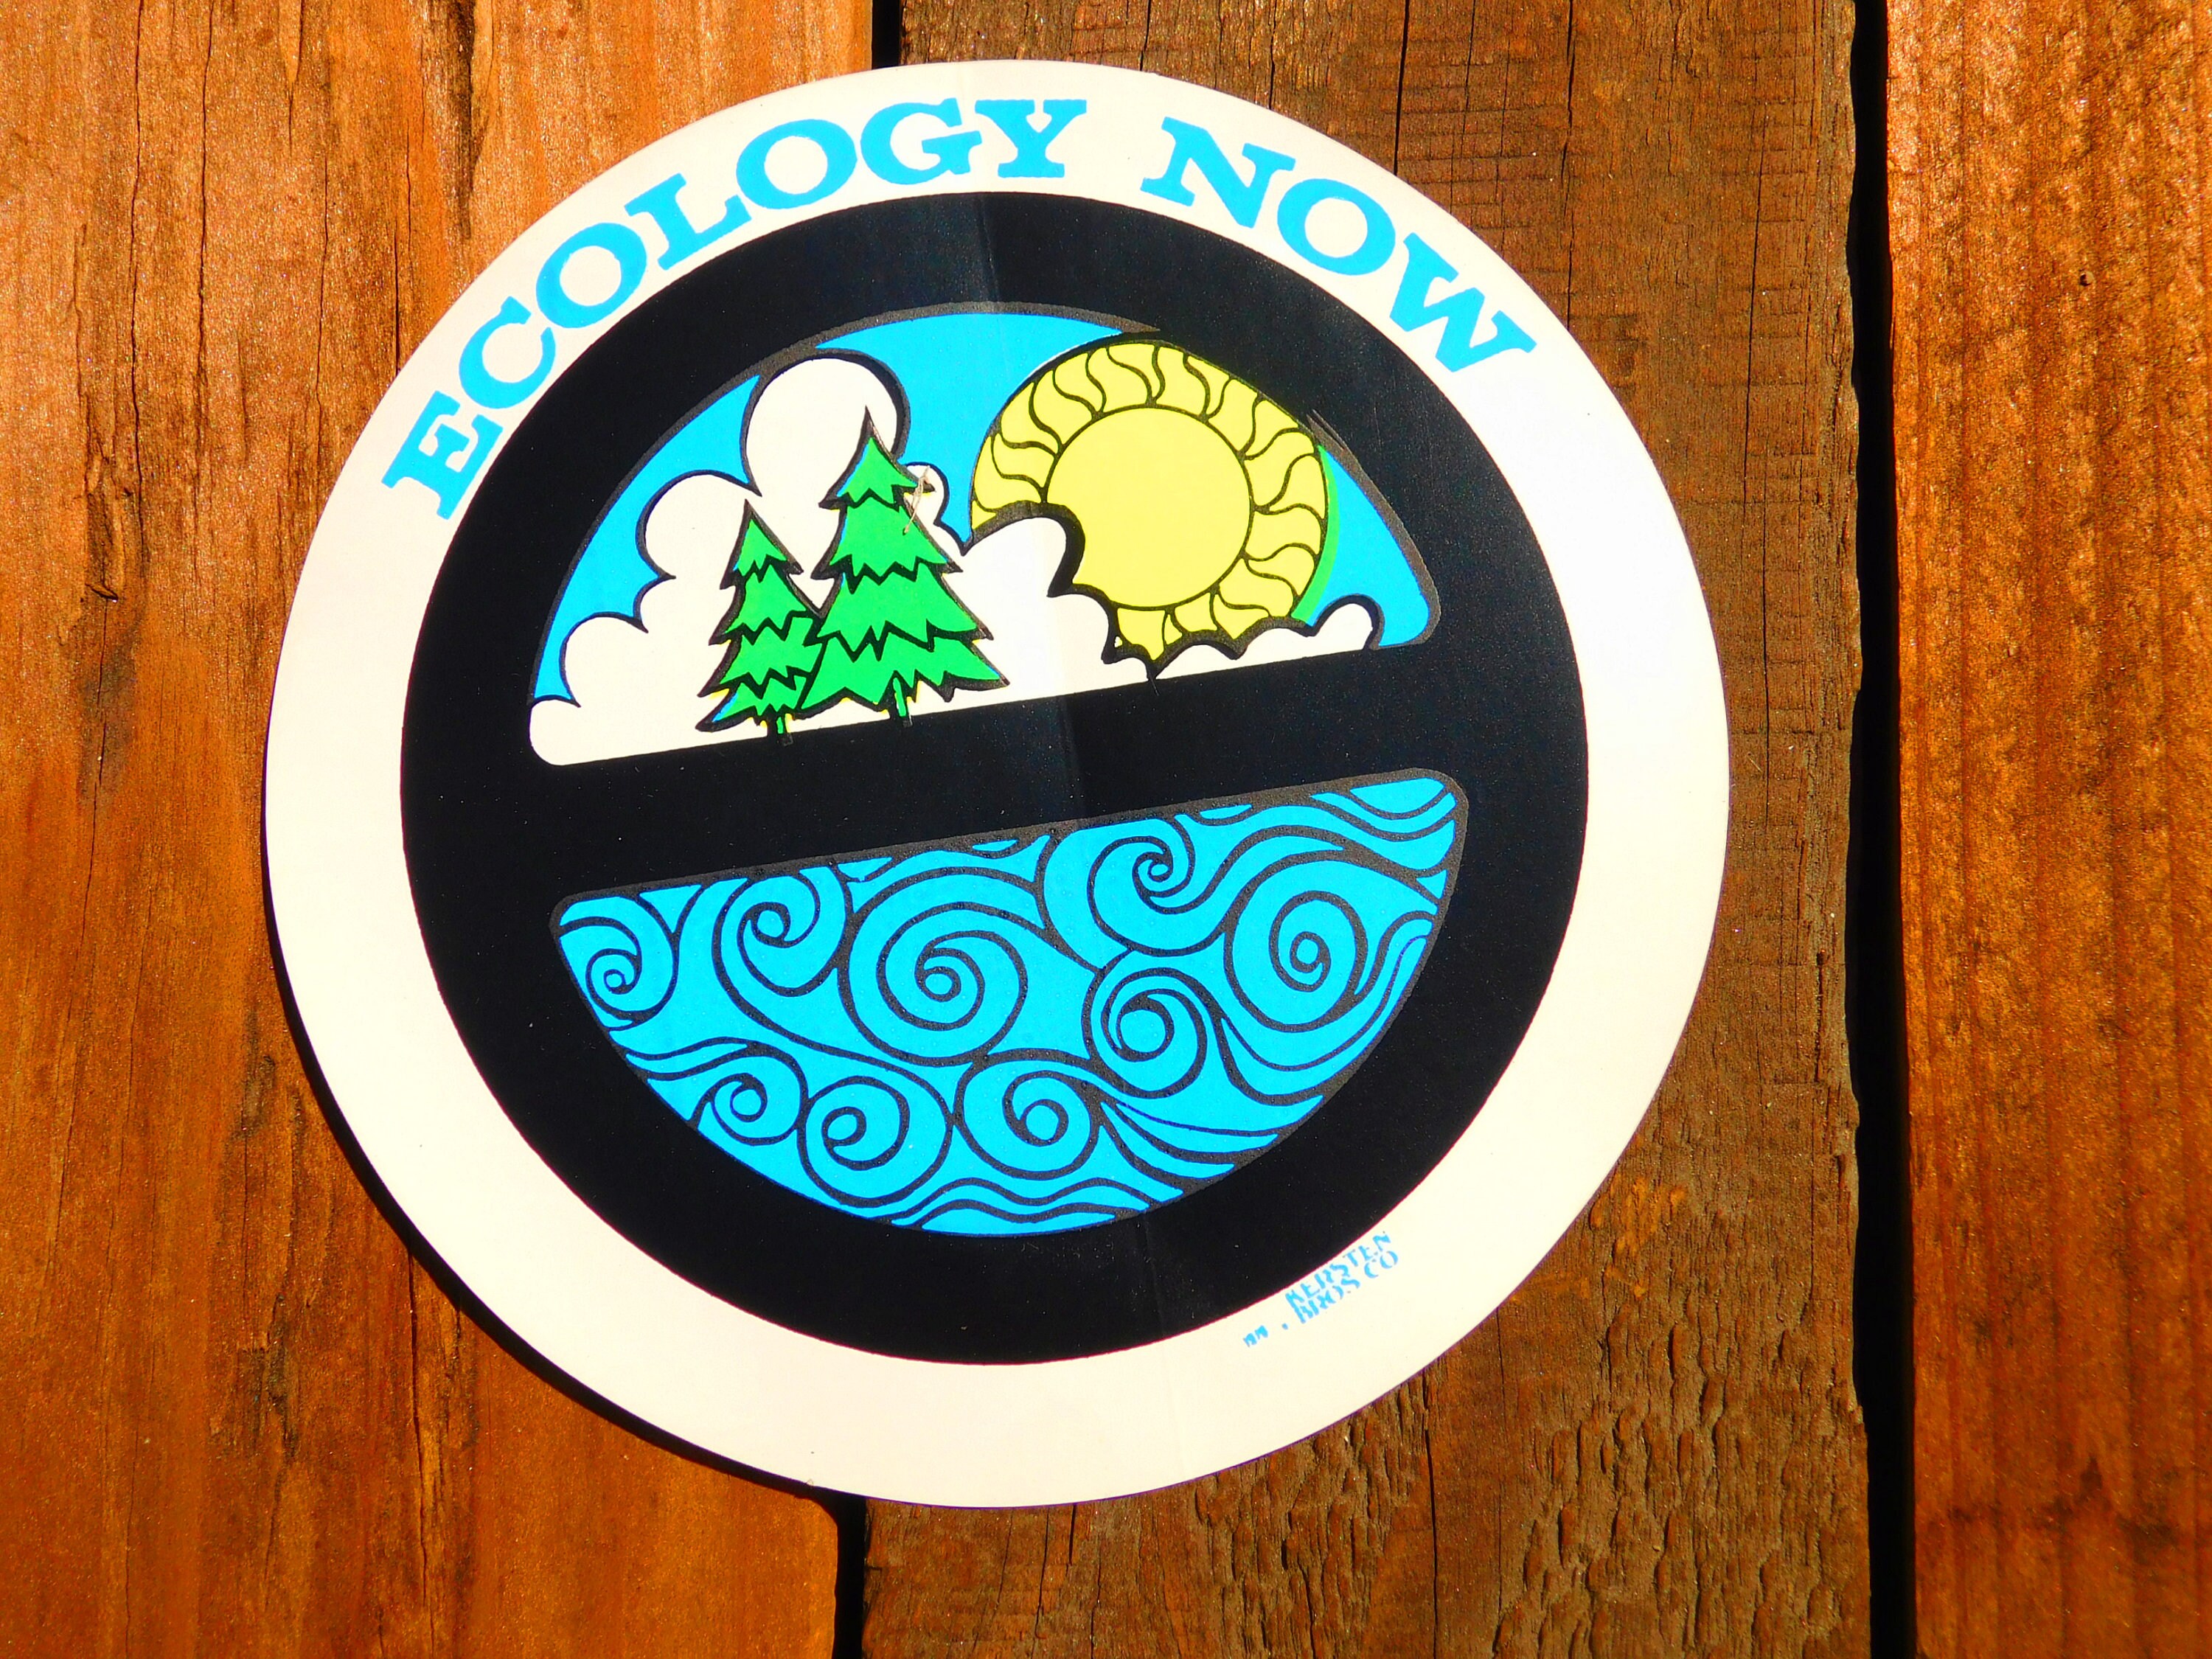 Vintage 70s Ecology Now Sticker